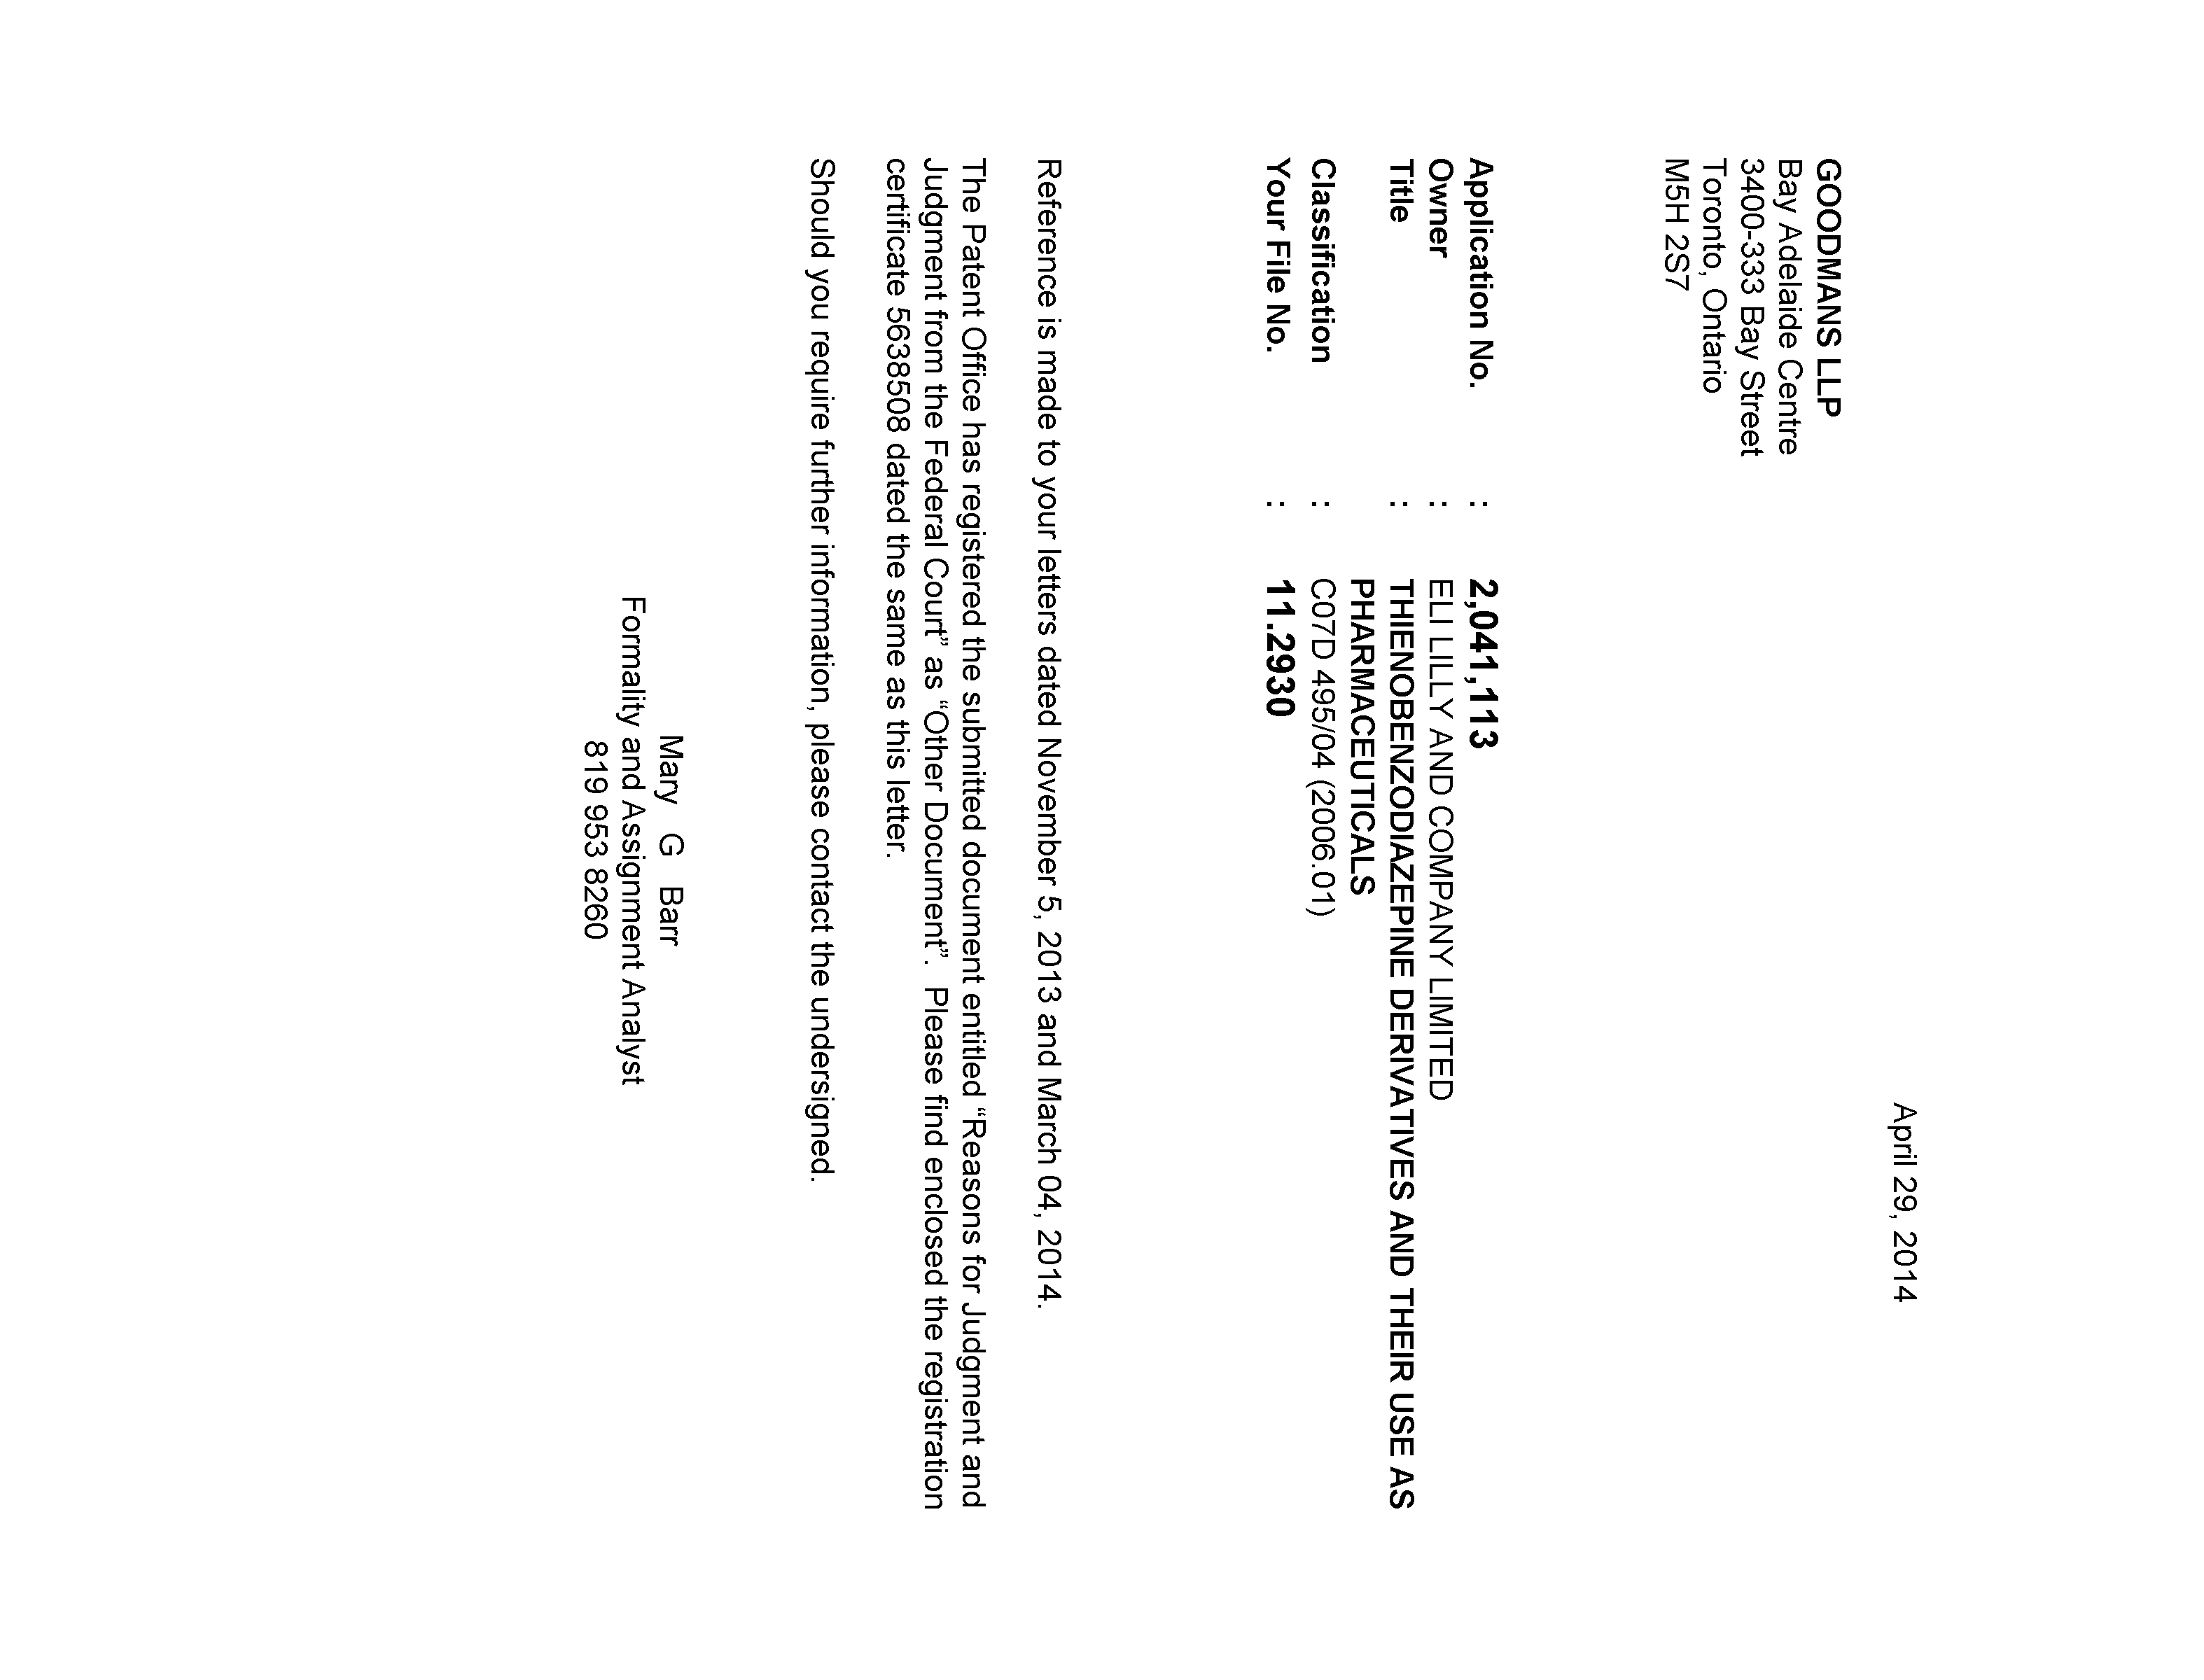 Canadian Patent Document 2041113. Correspondence 20131229. Image 1 of 1